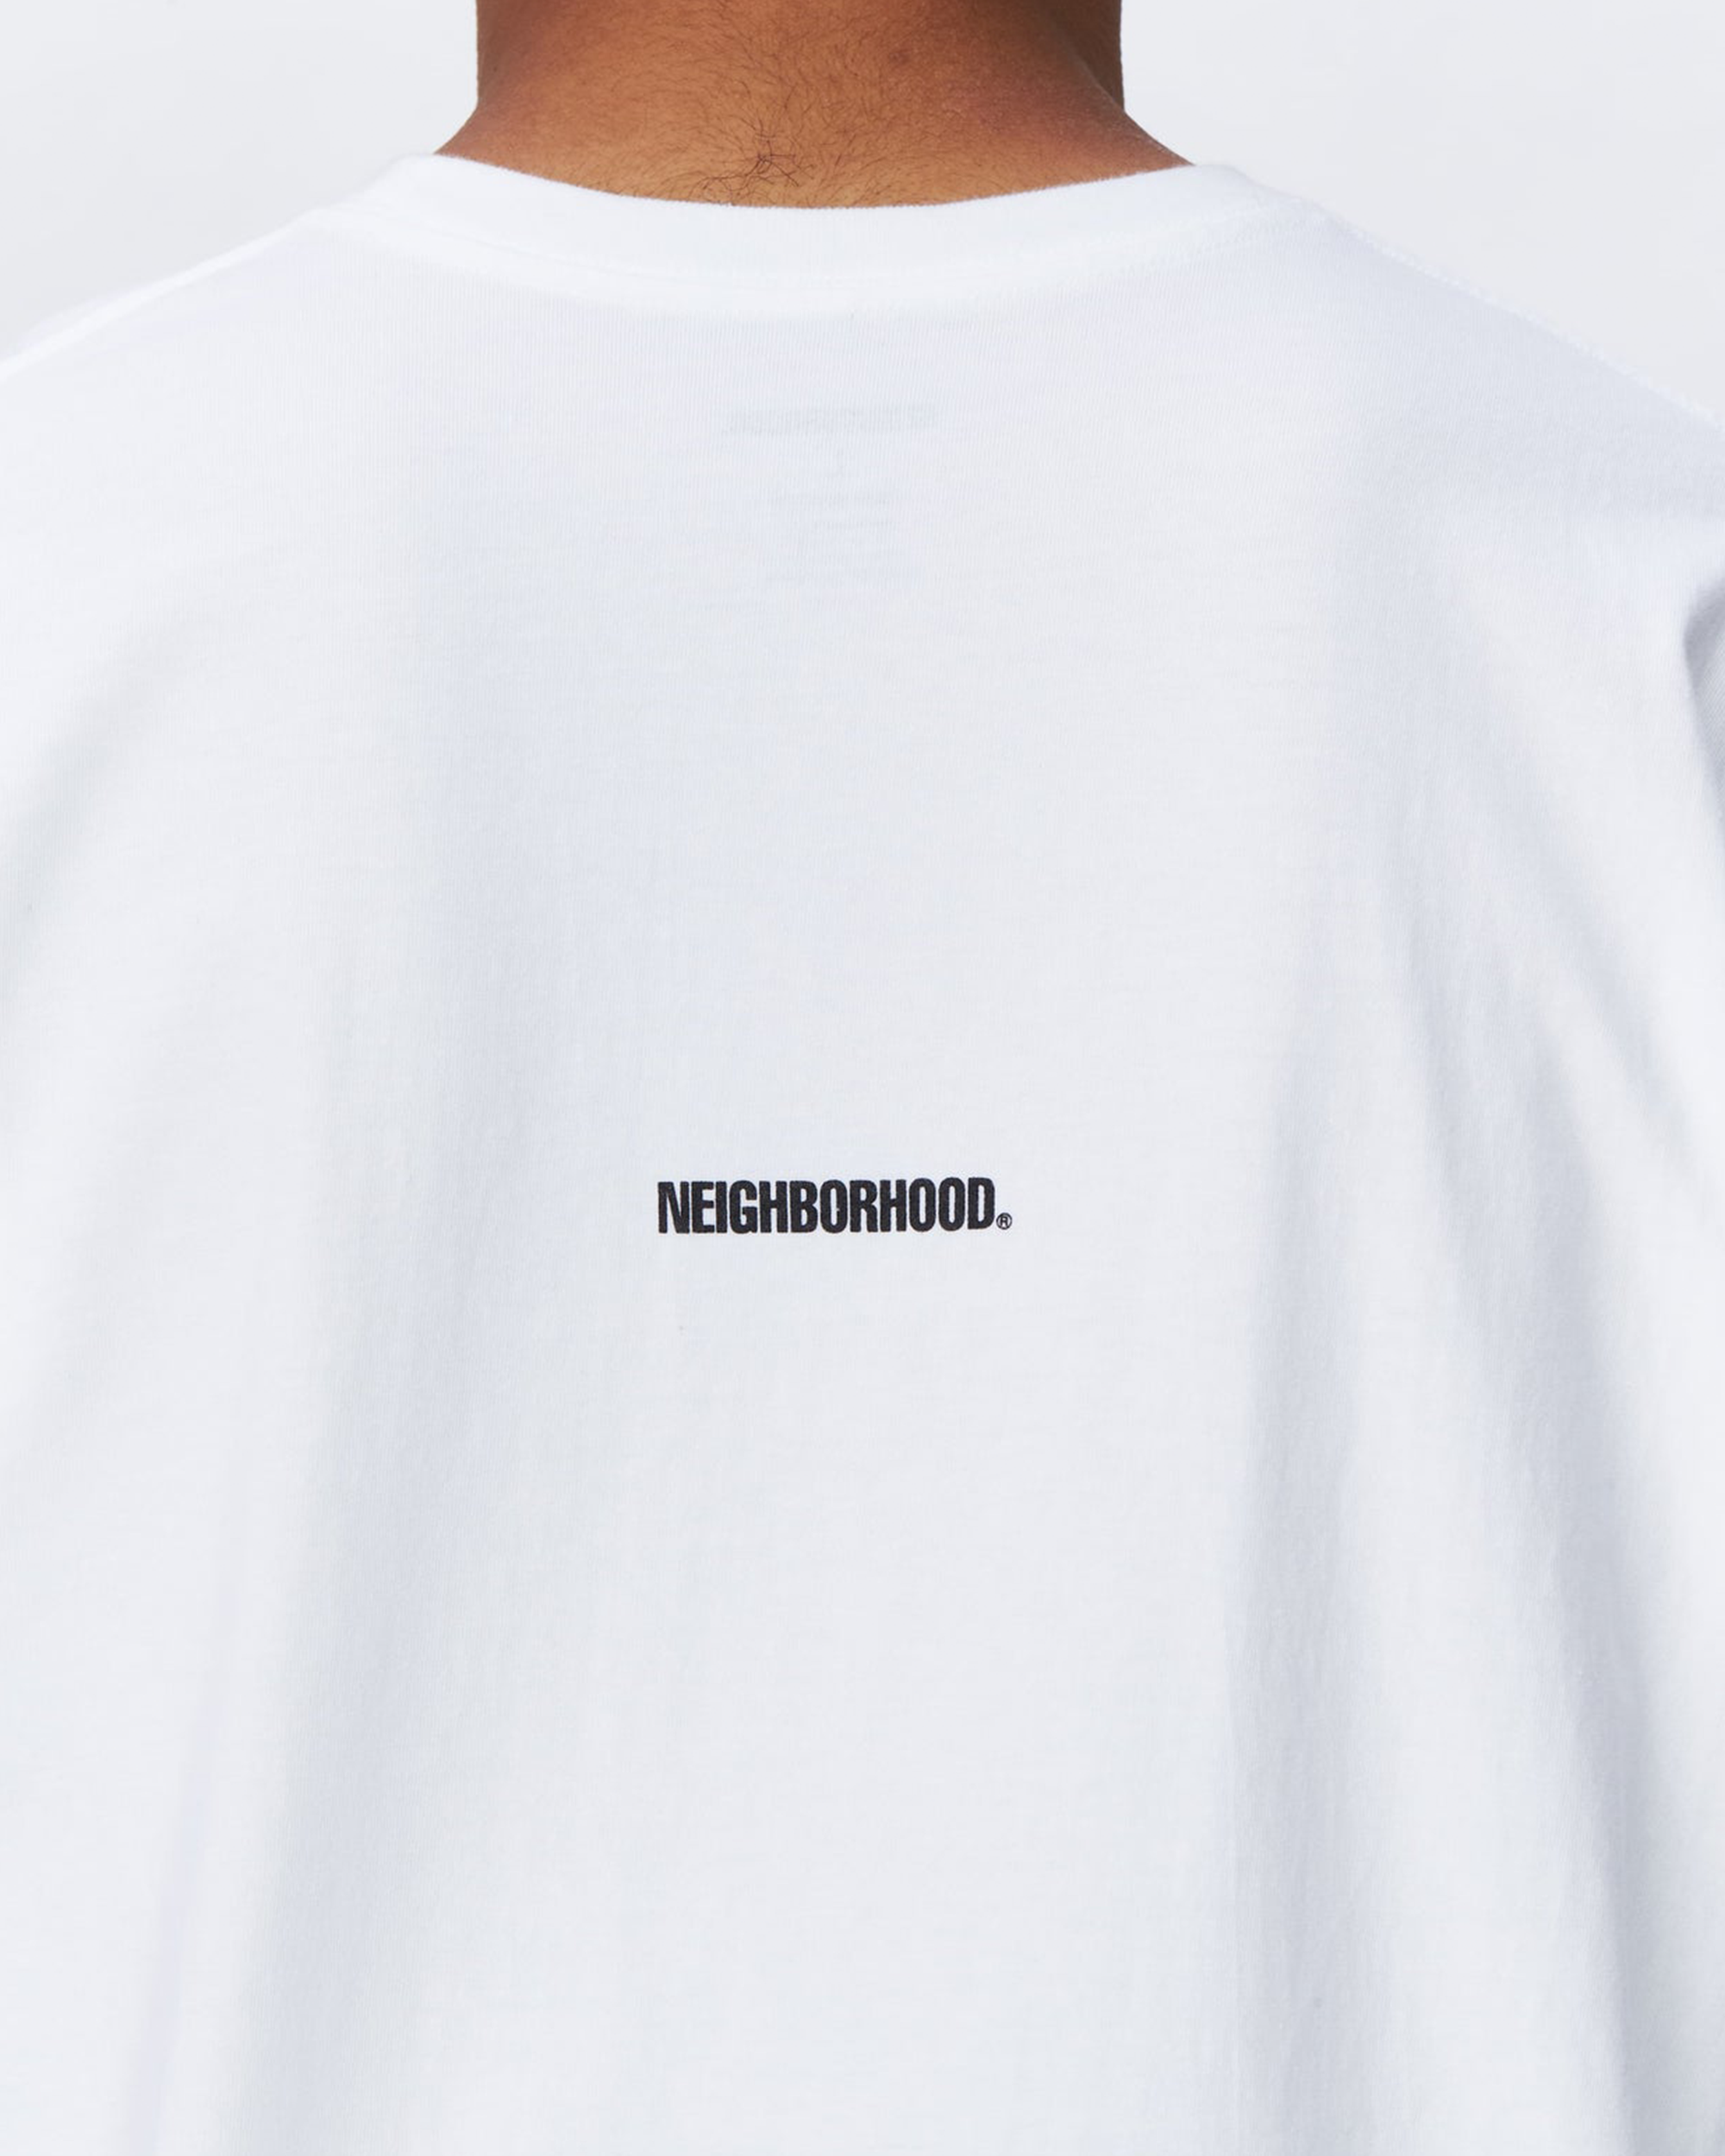 NH 15 T-Shirt - White